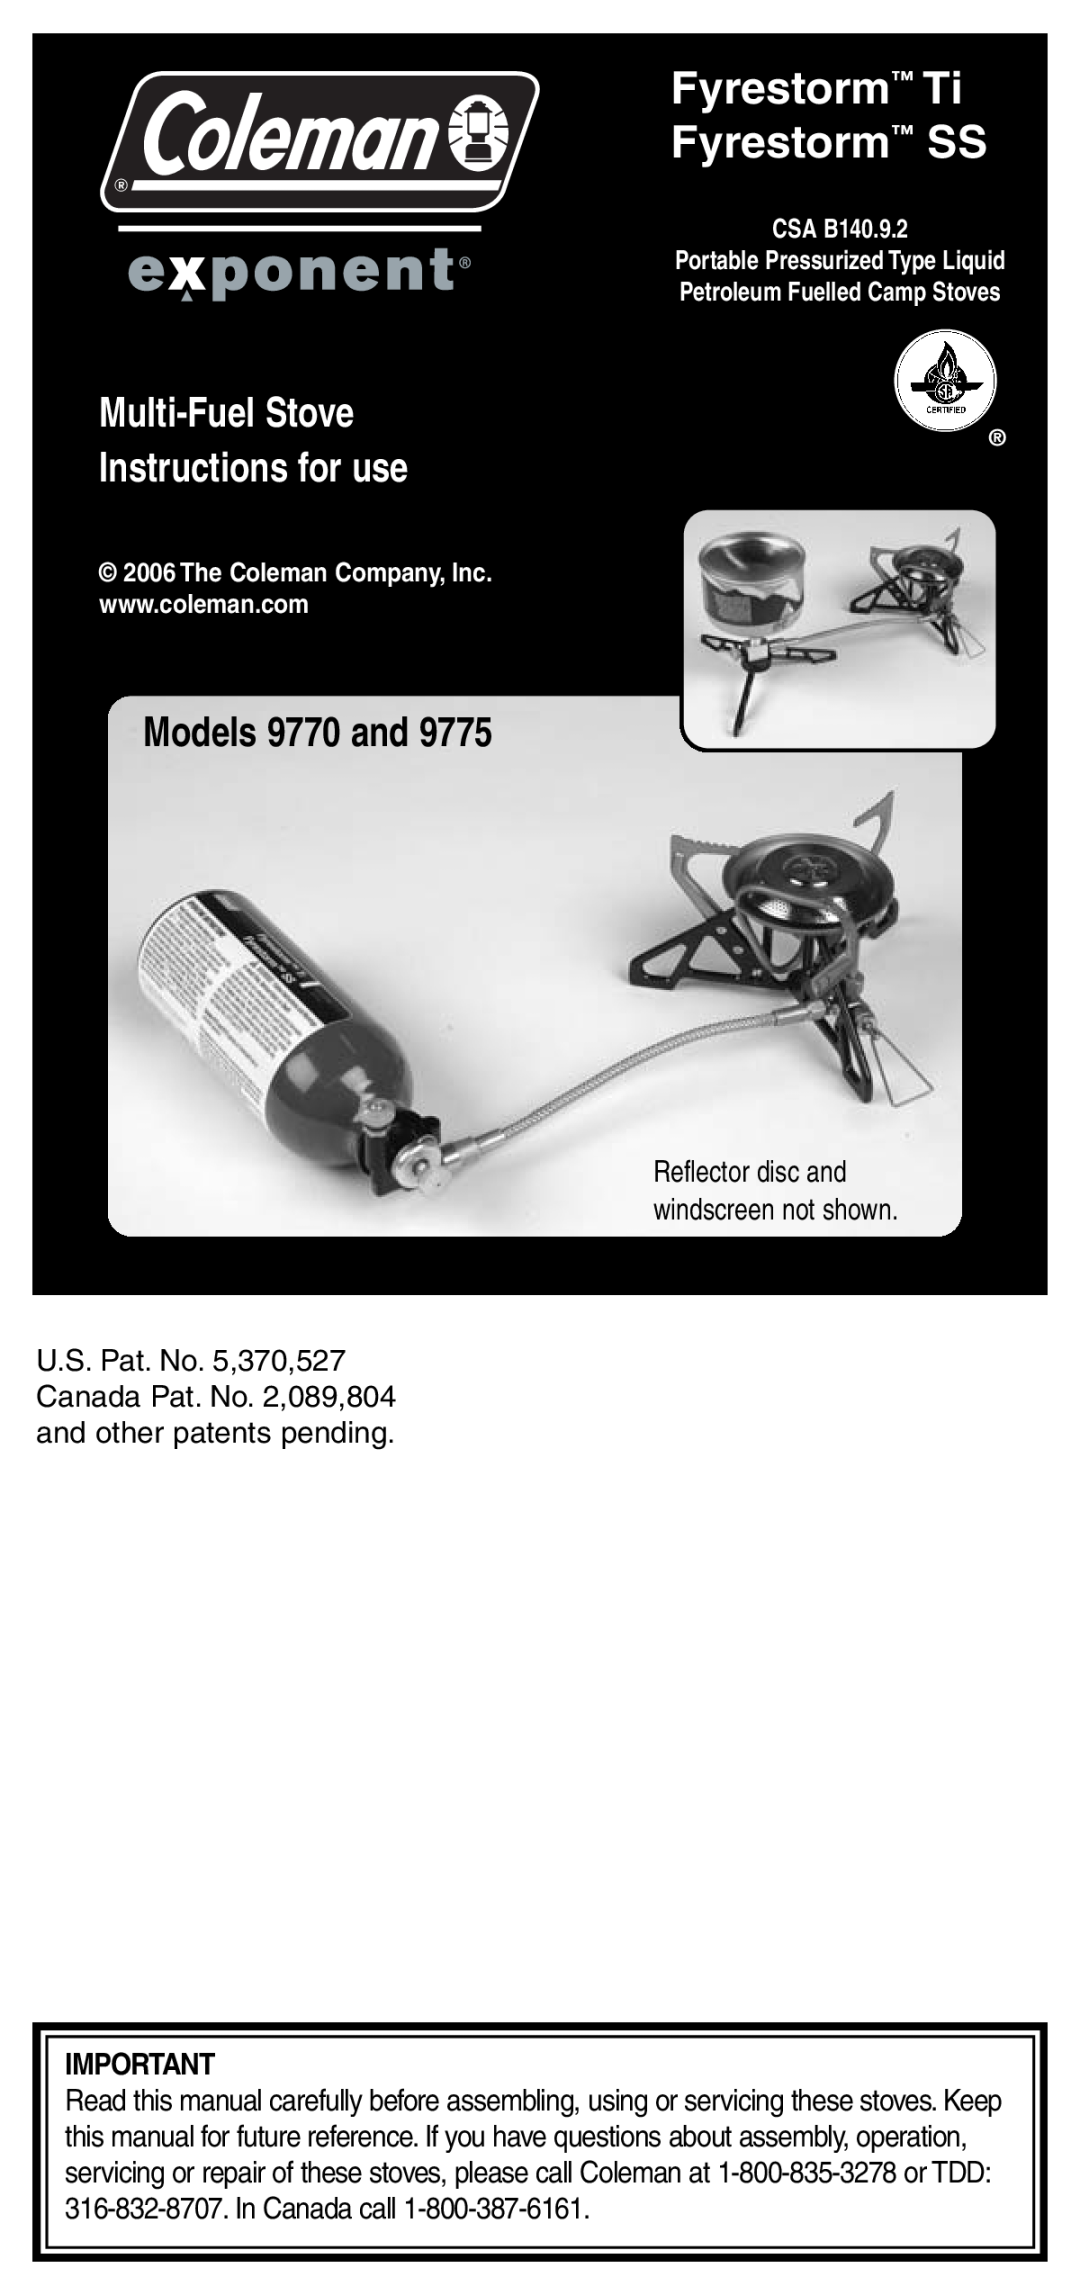 Coleman 9775 manual Fyrestorm Ti Fyrestorm SS, Multi-FuelStove, Instructions for use, Models 9770 and 